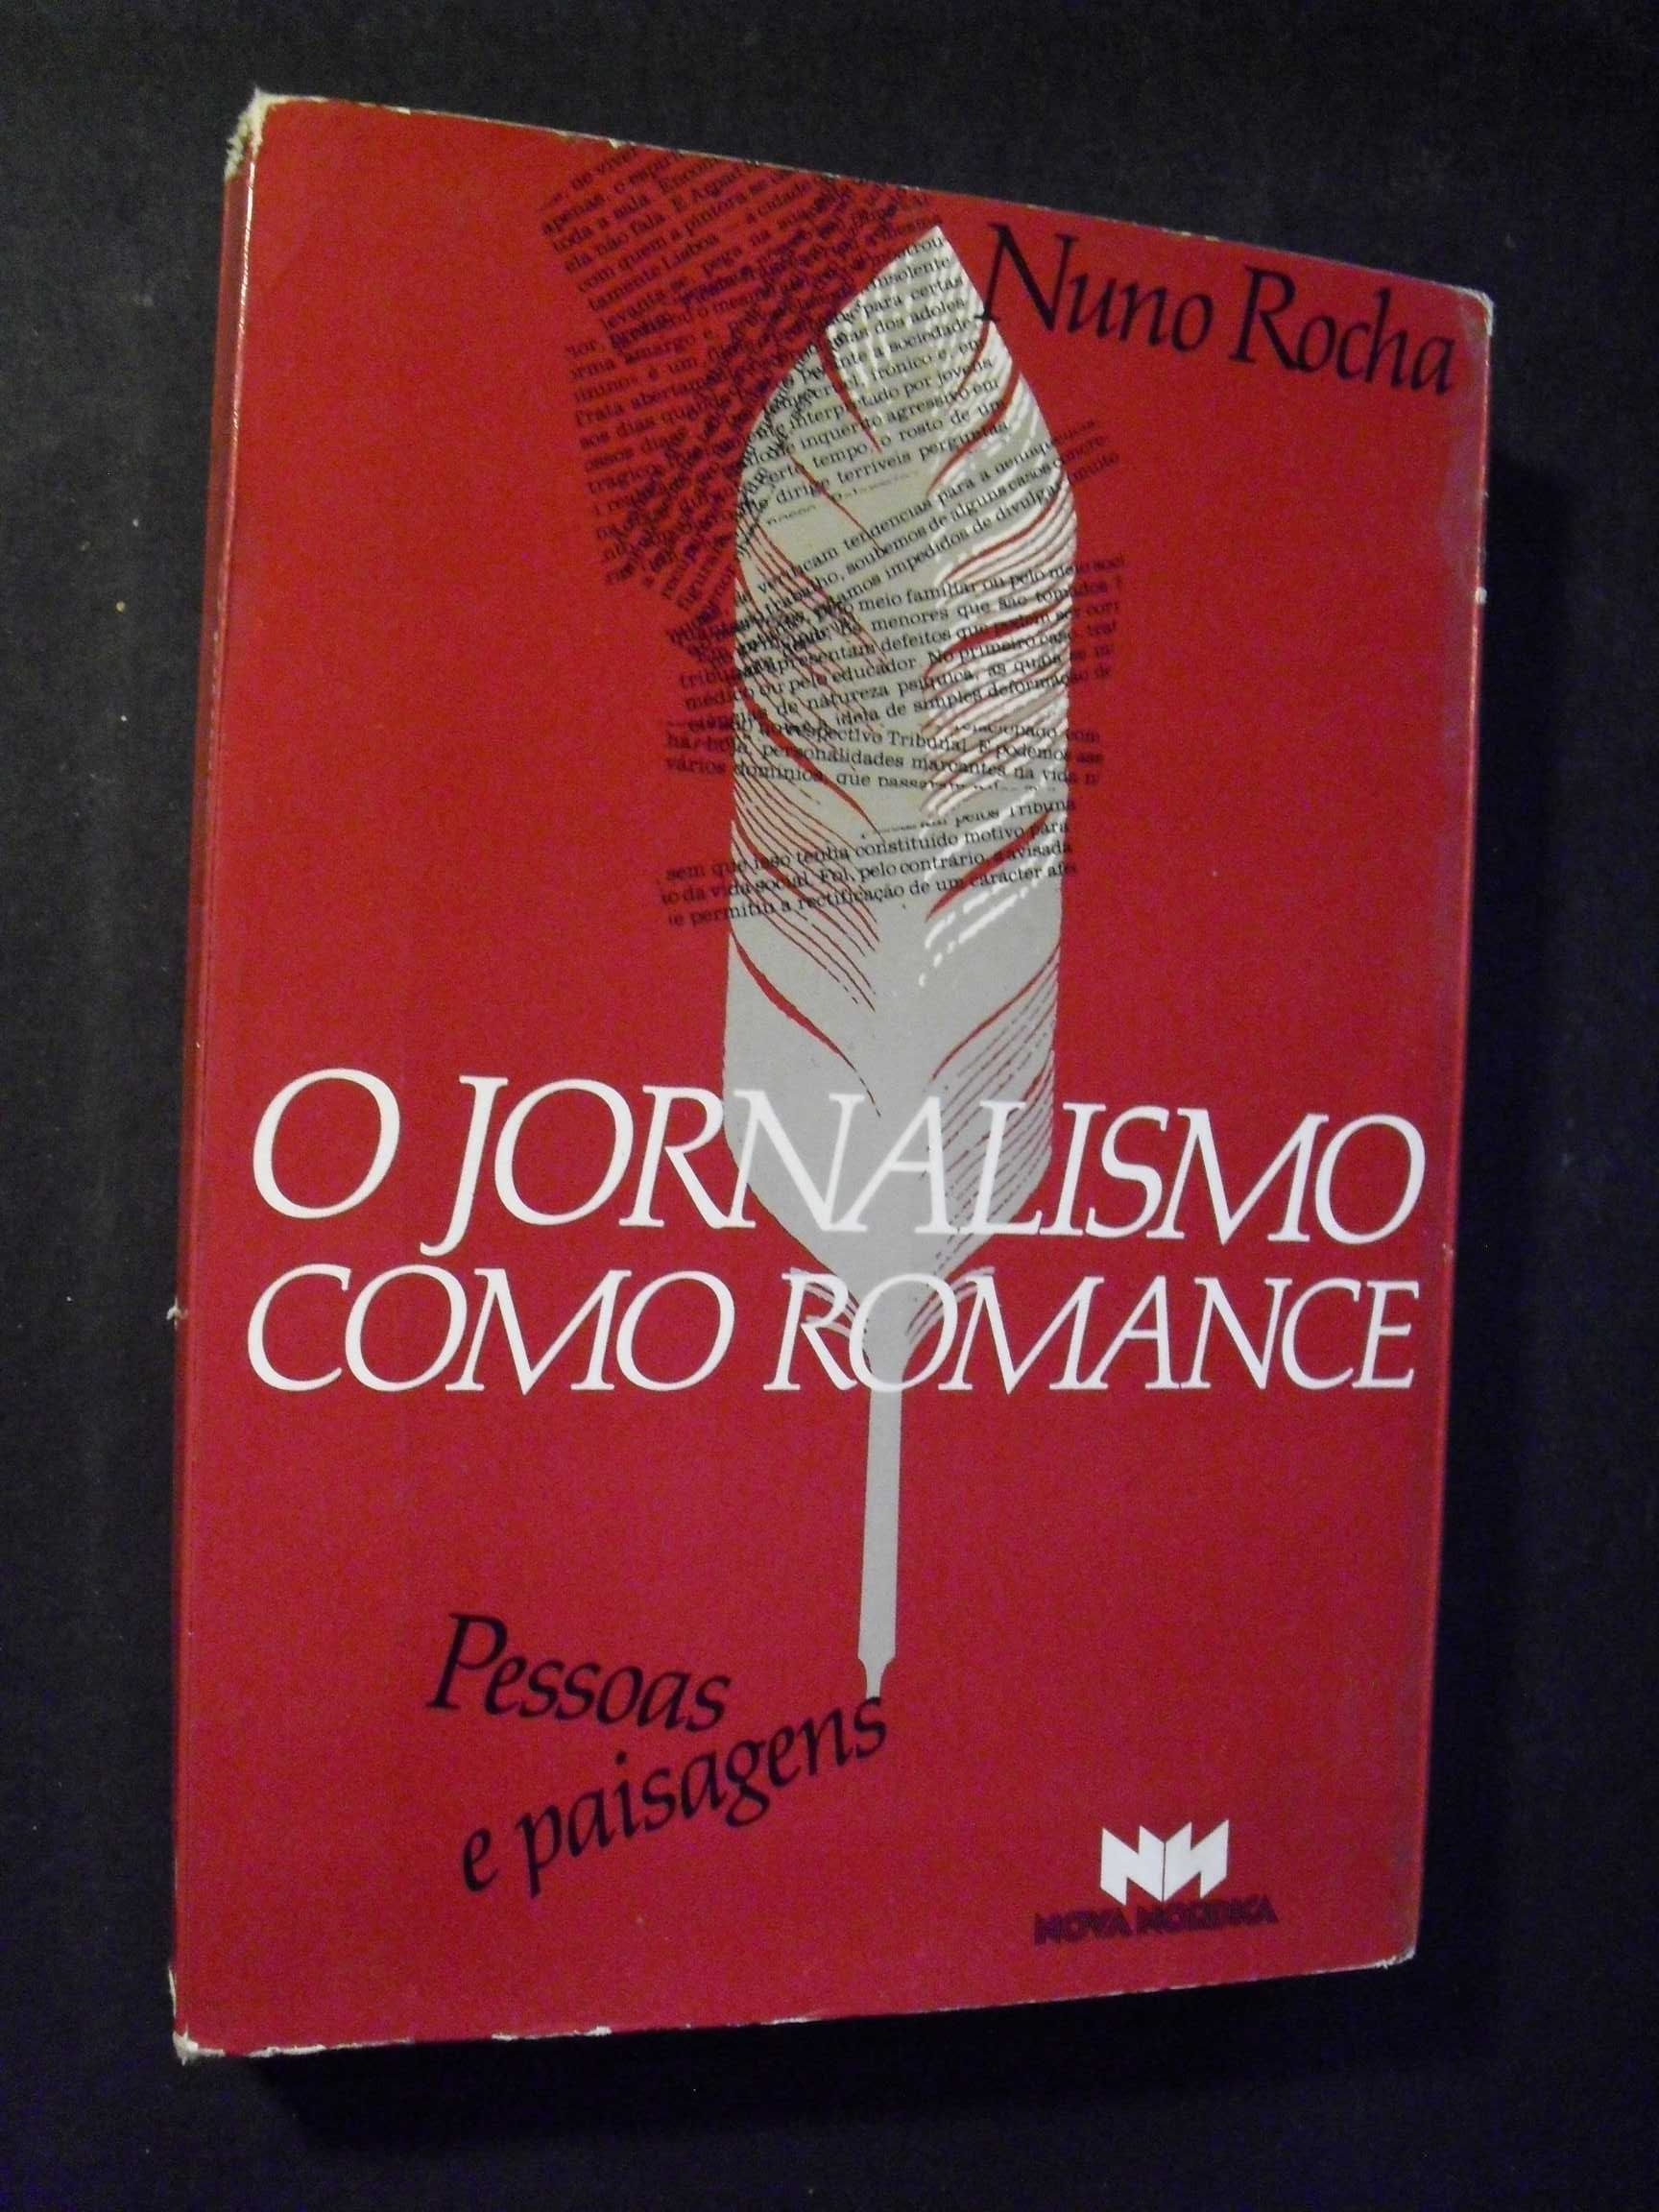 Rocha (Nuno);O Jornalismo com Romance